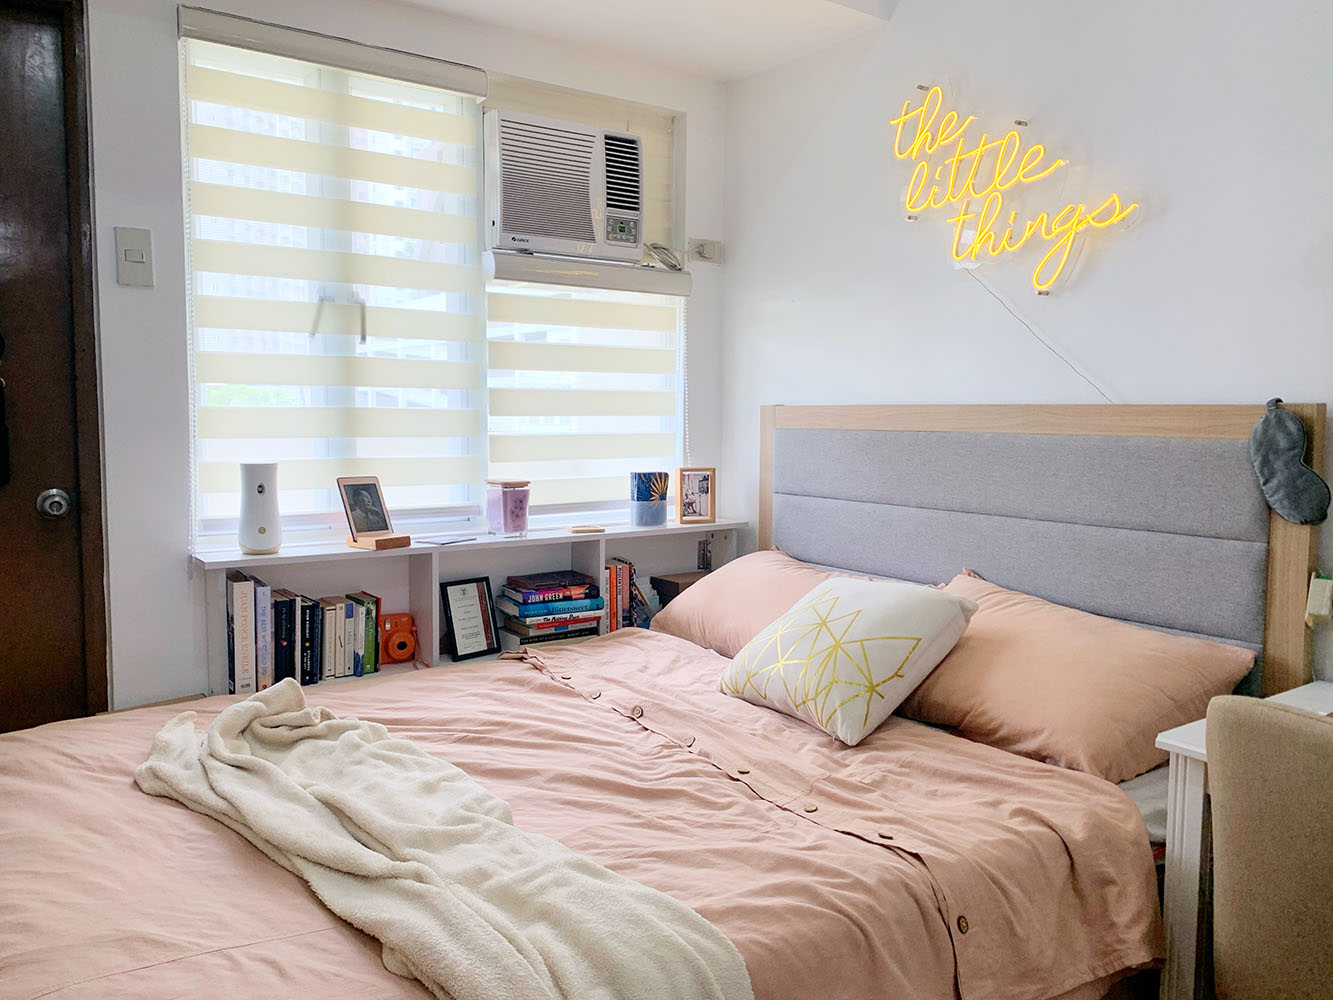 pinterest-worthy bedroom in small condo unit